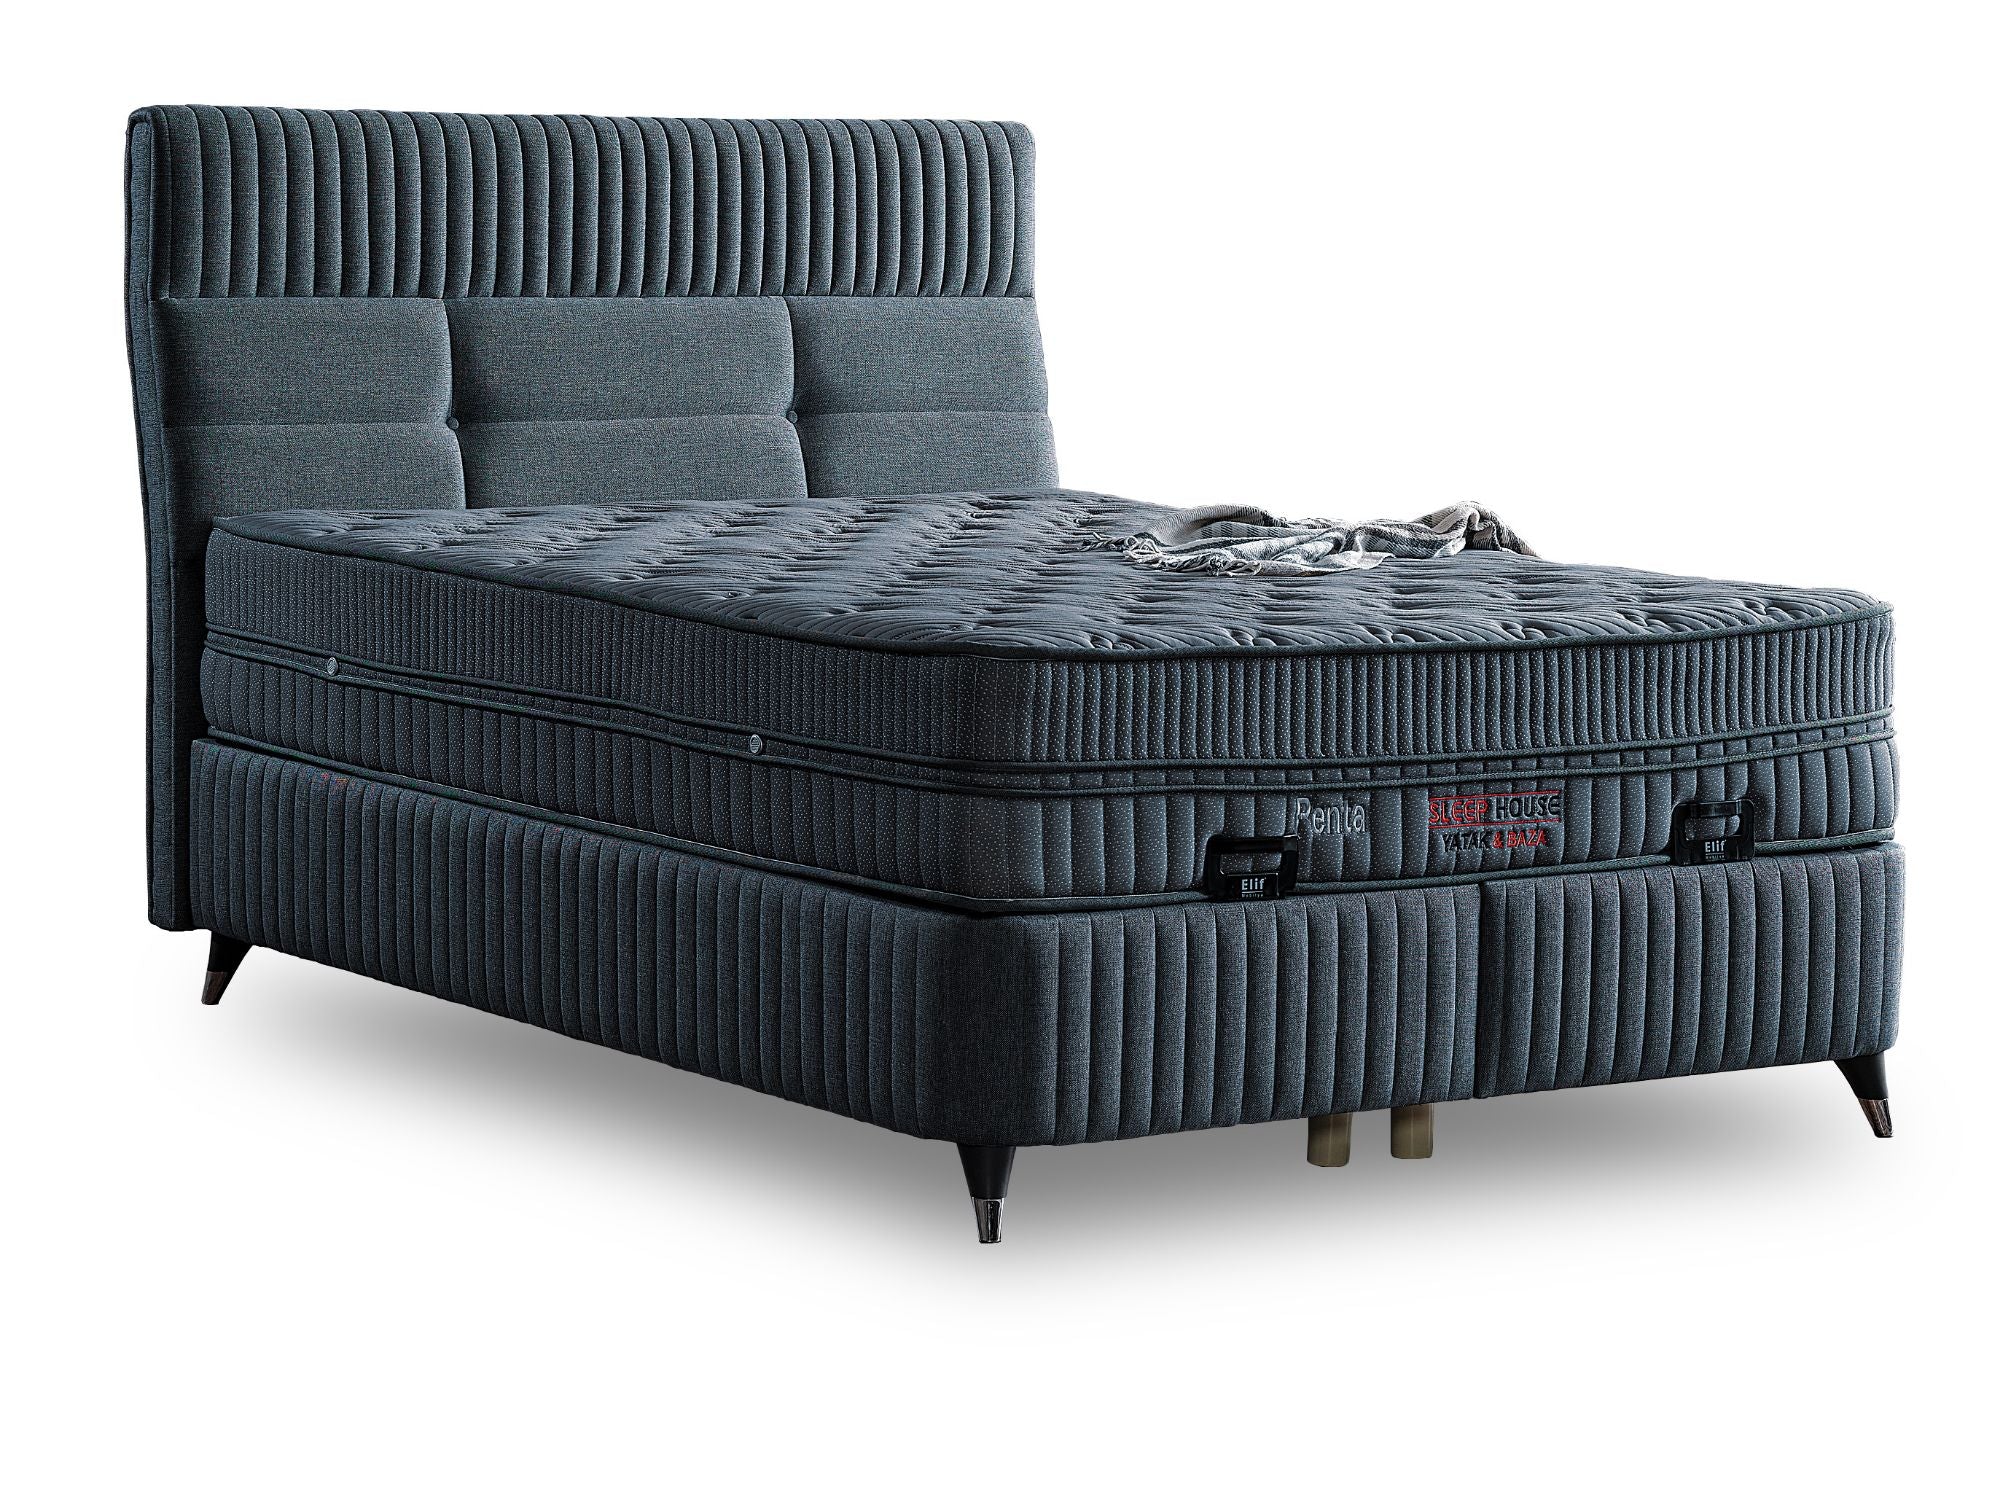 Tetra Storage Bed With Headboard Grey